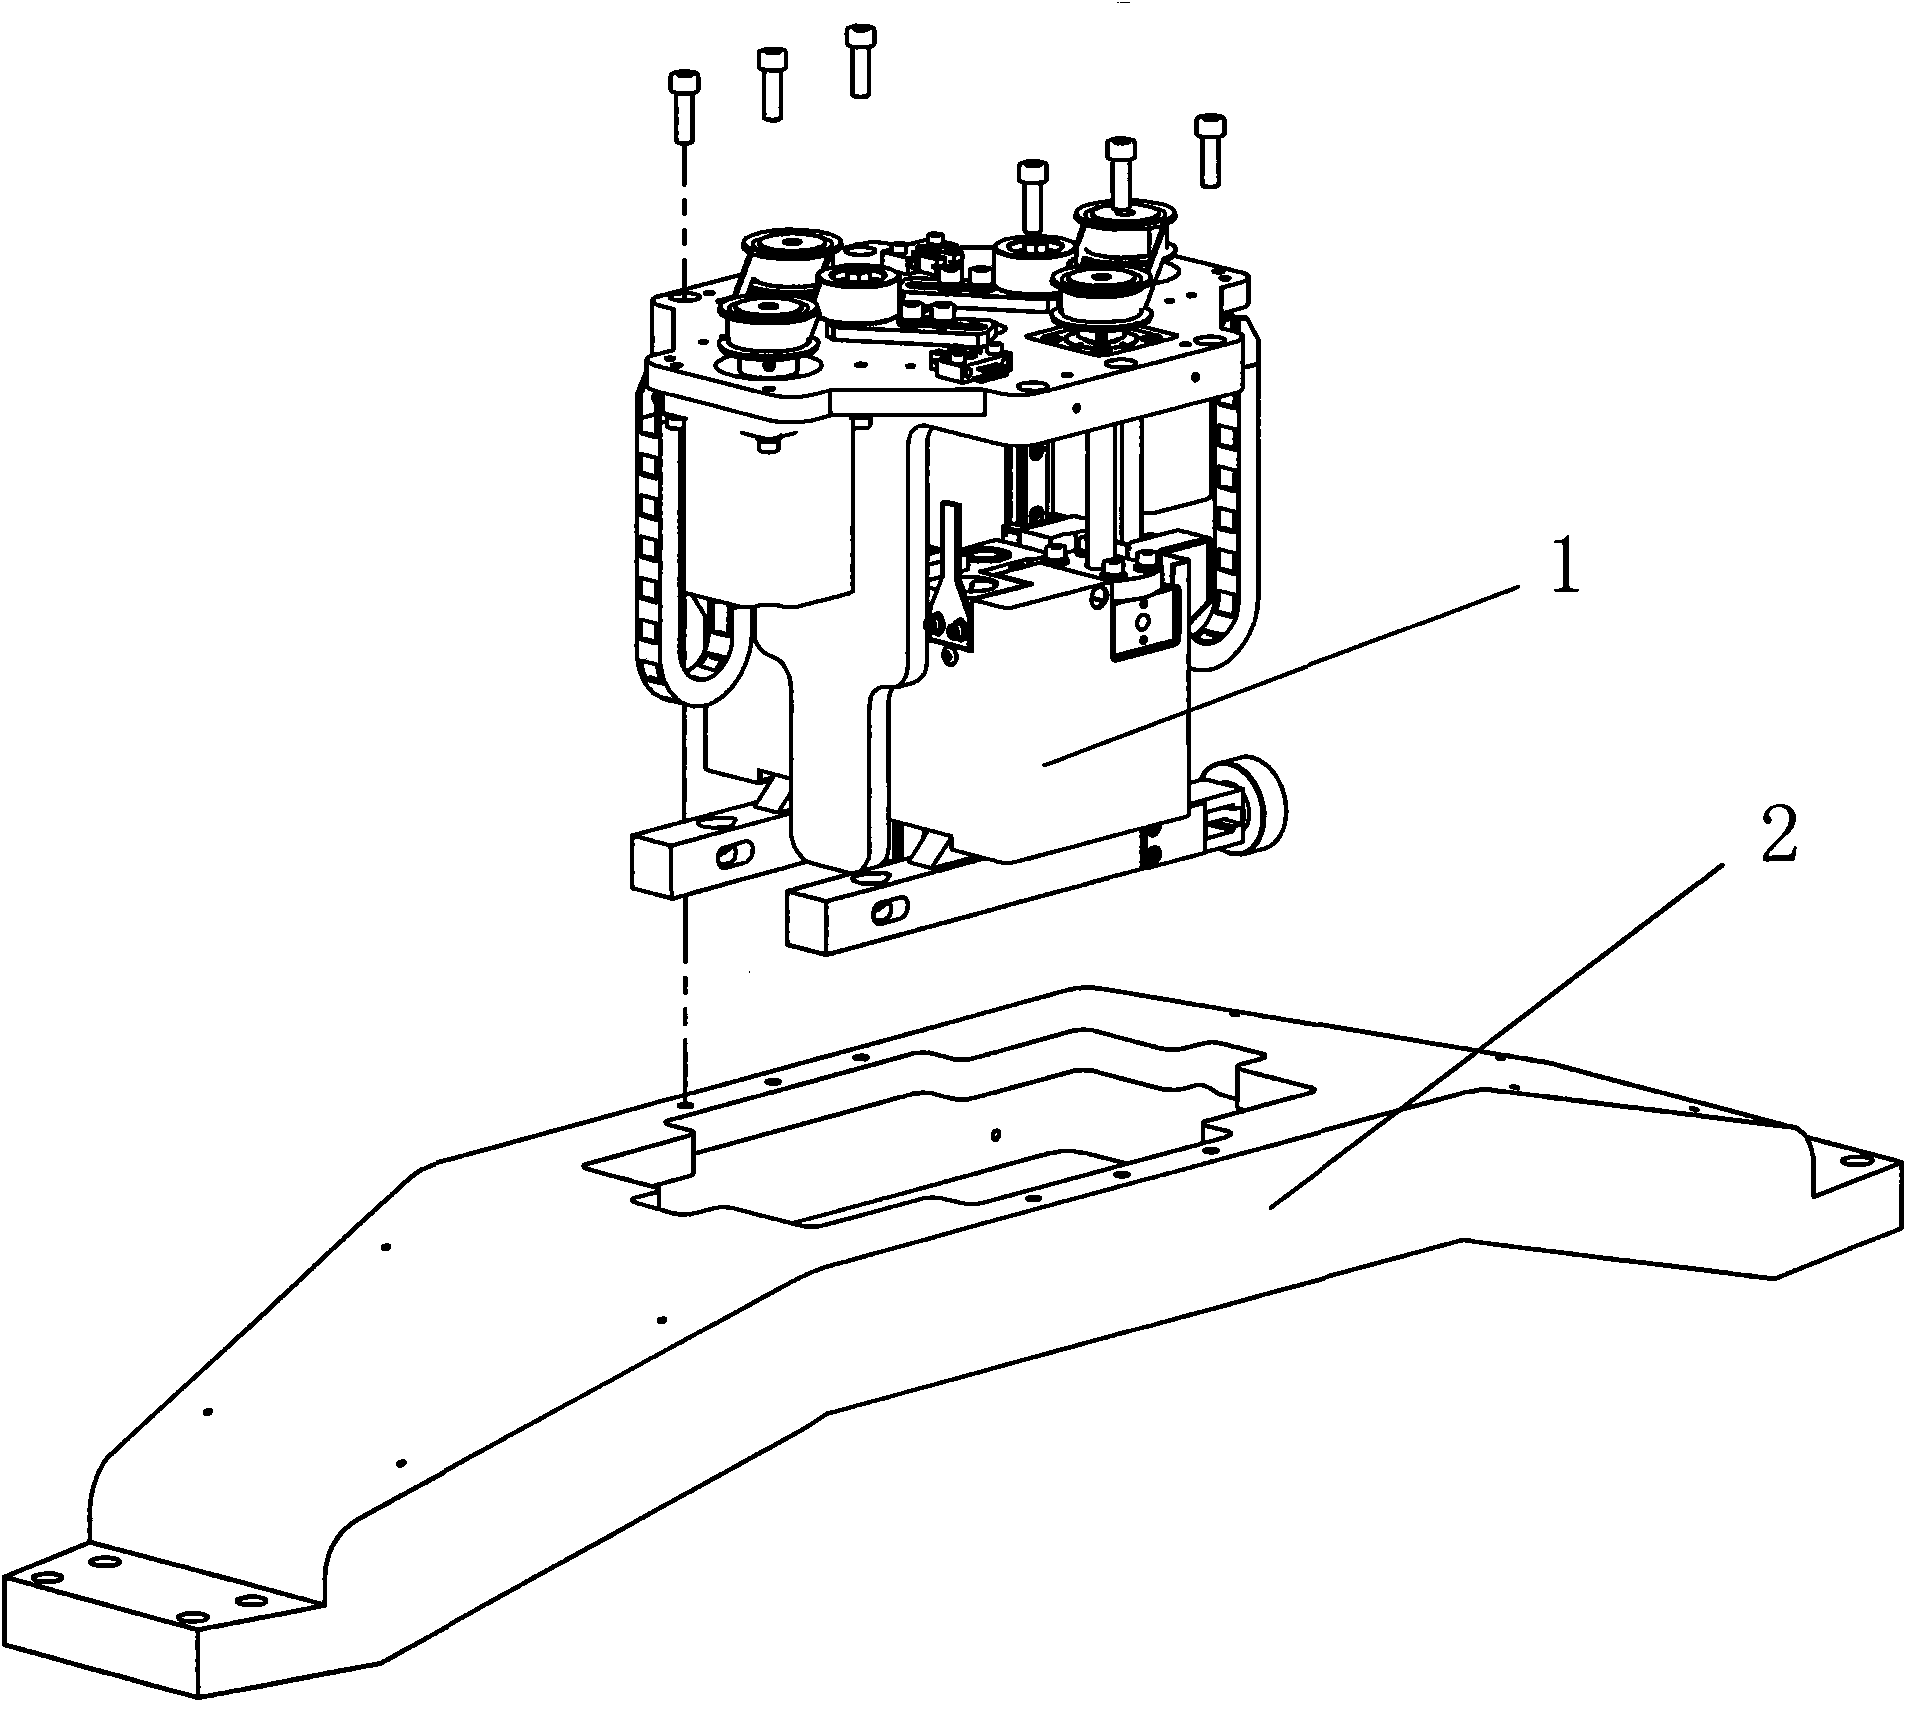 Contact sensing scarper mechanism and full automatic vision printer